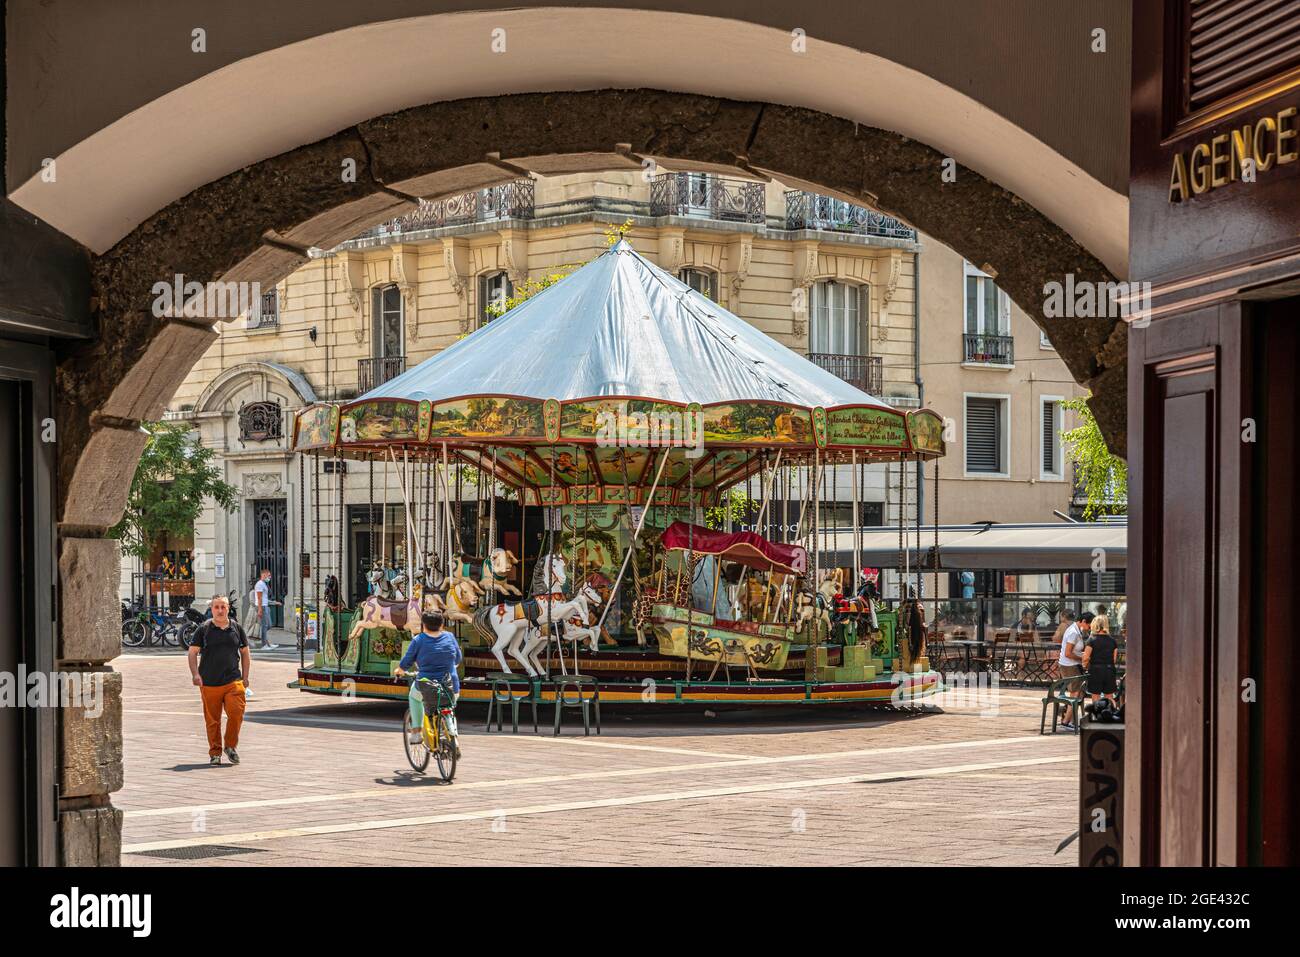 The carousel for children in Grenette square in Grenoble. Grenoble, Isère département, Auvergne-Rhône-Alpes Region, France, Europe Stock Photo